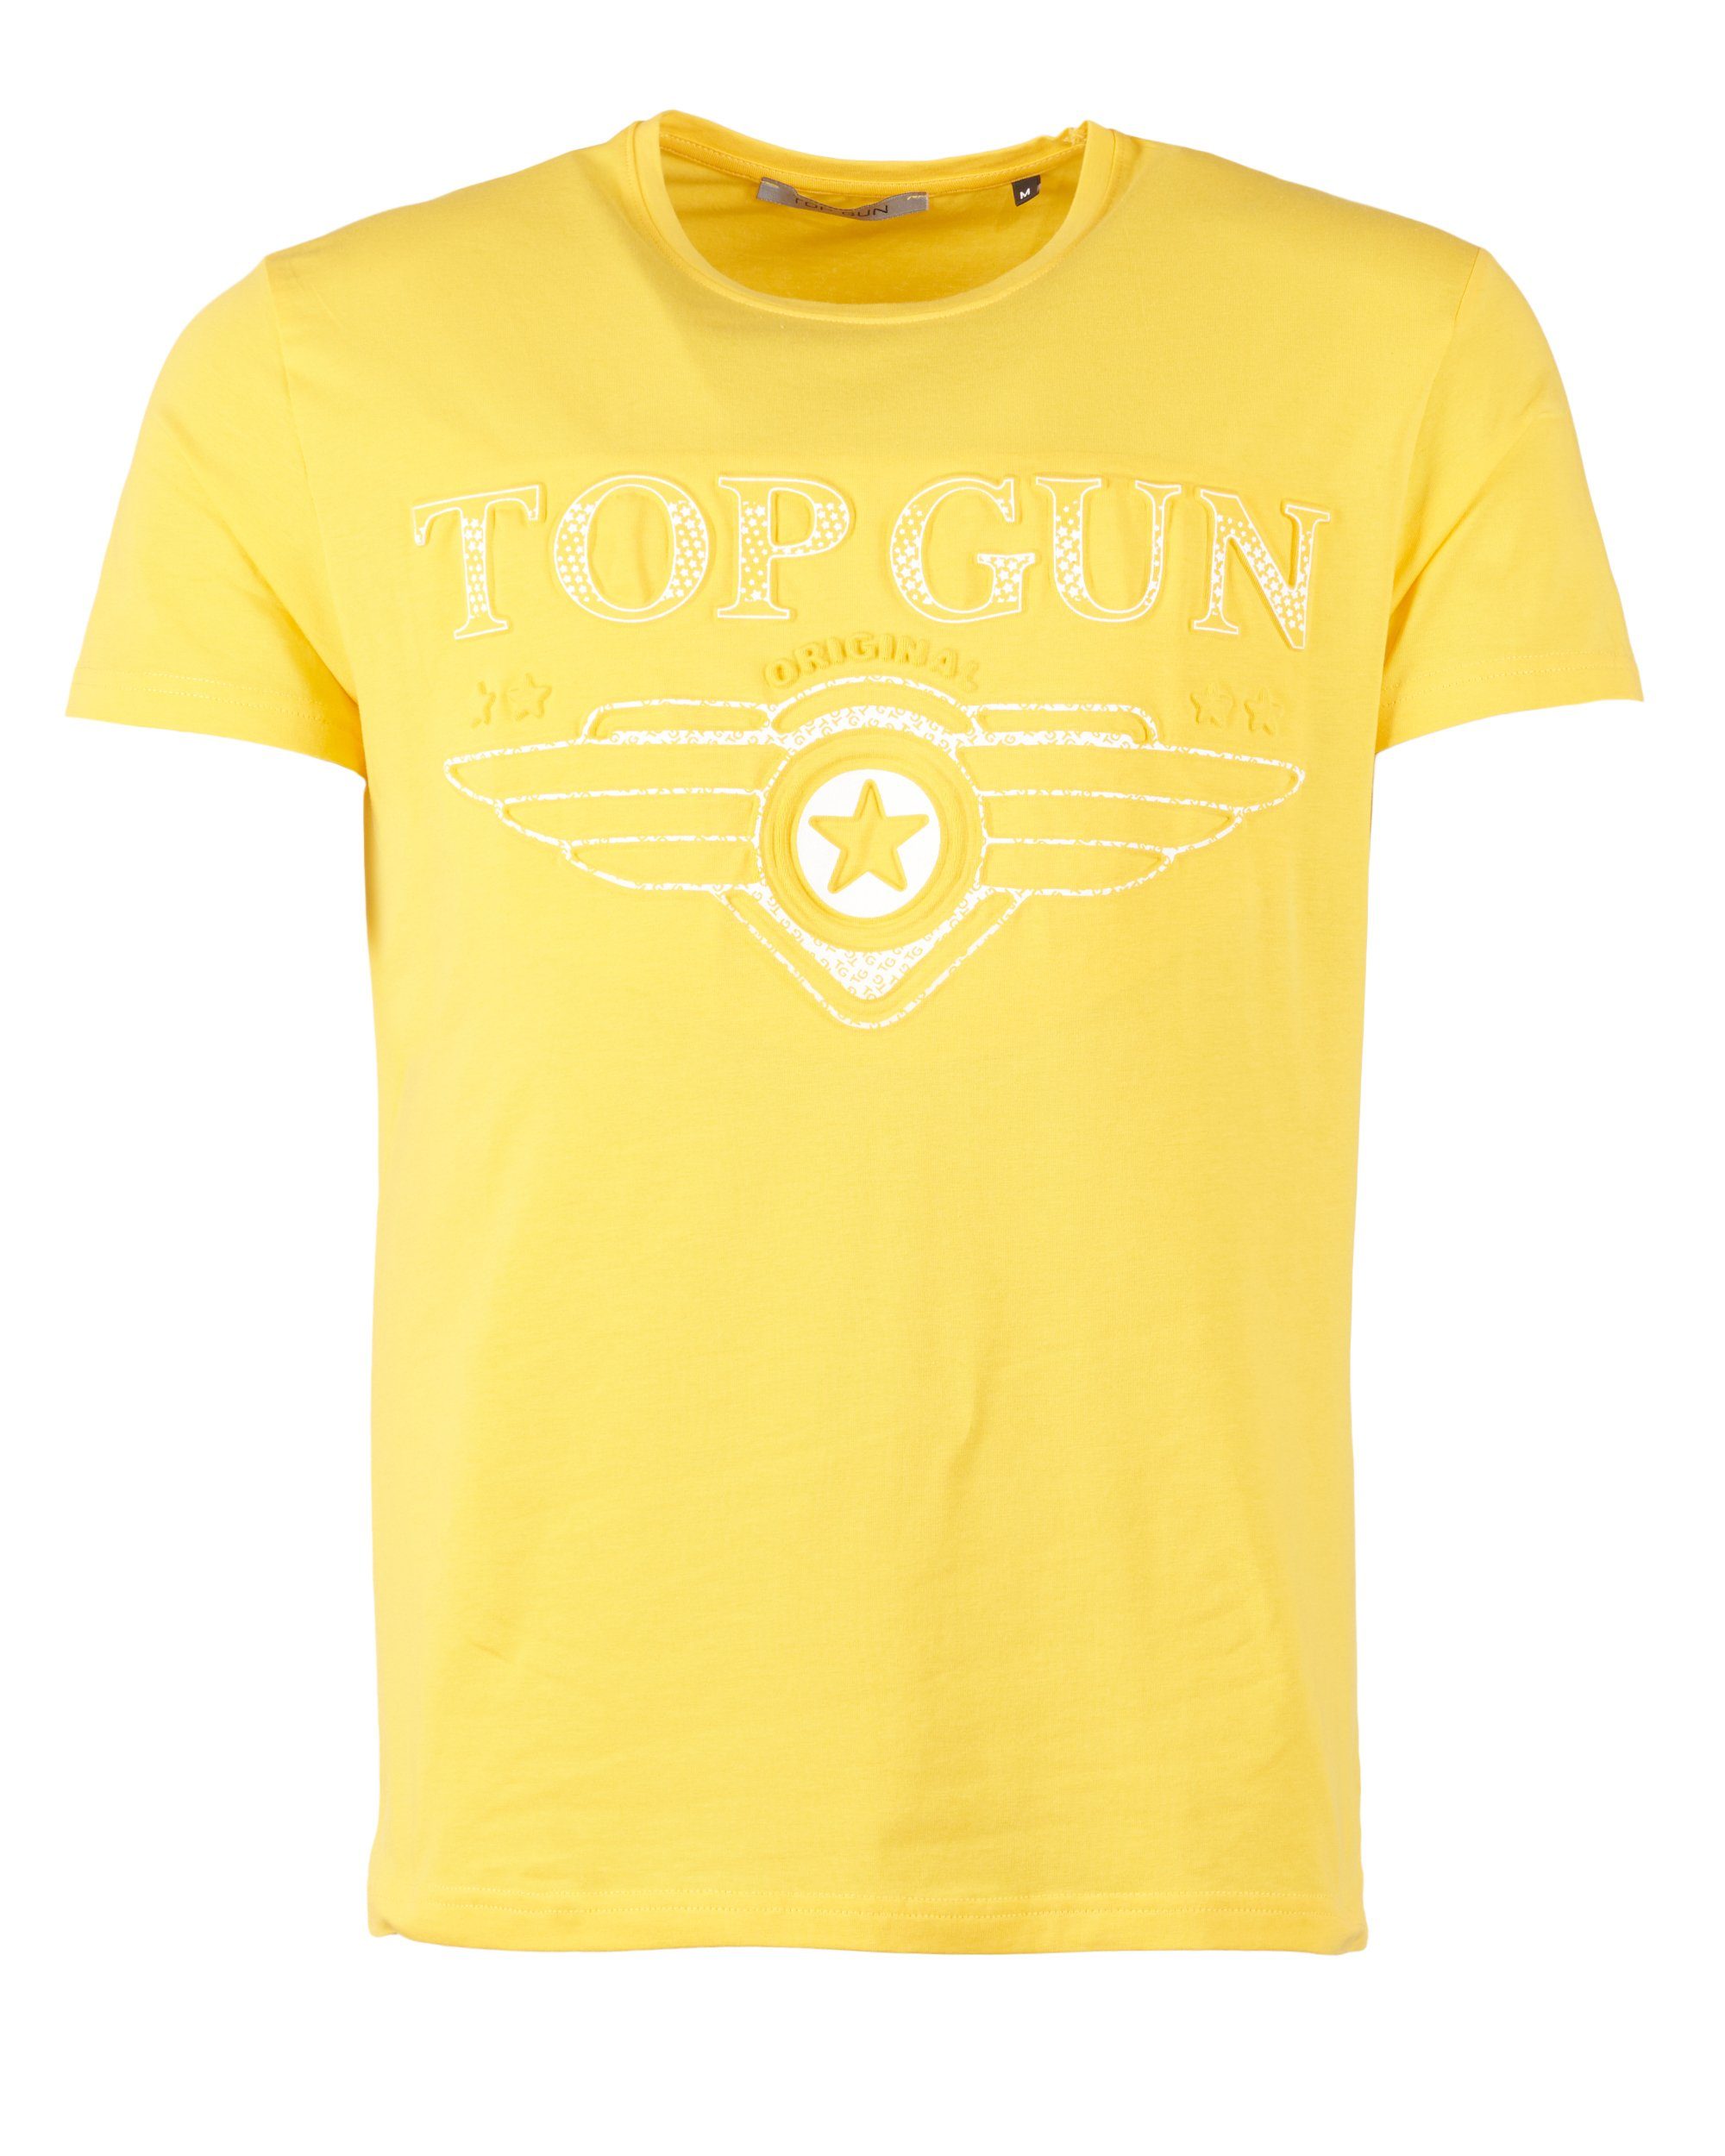 TOP GUN T-Shirt Bling TG20193018 yellow